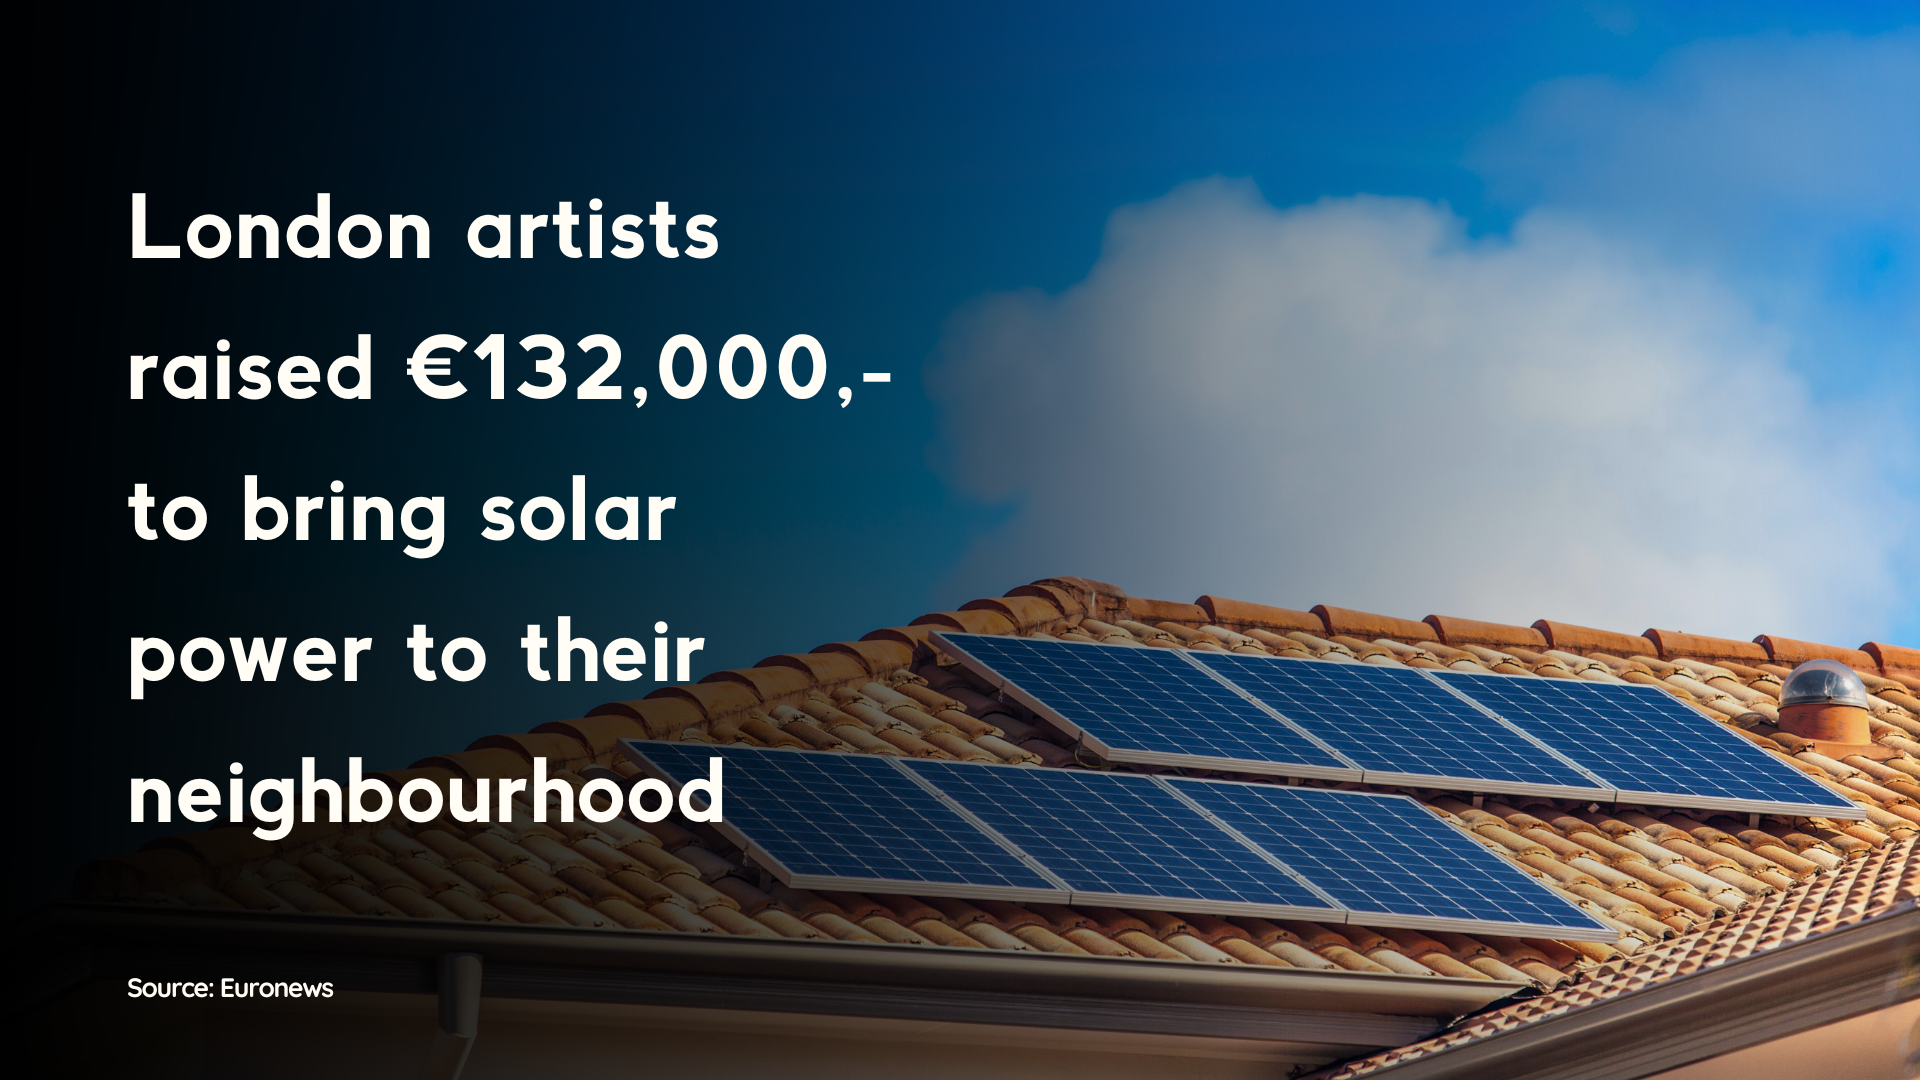 London artists raised €132,000,- to bring solar power to their neighbourhood